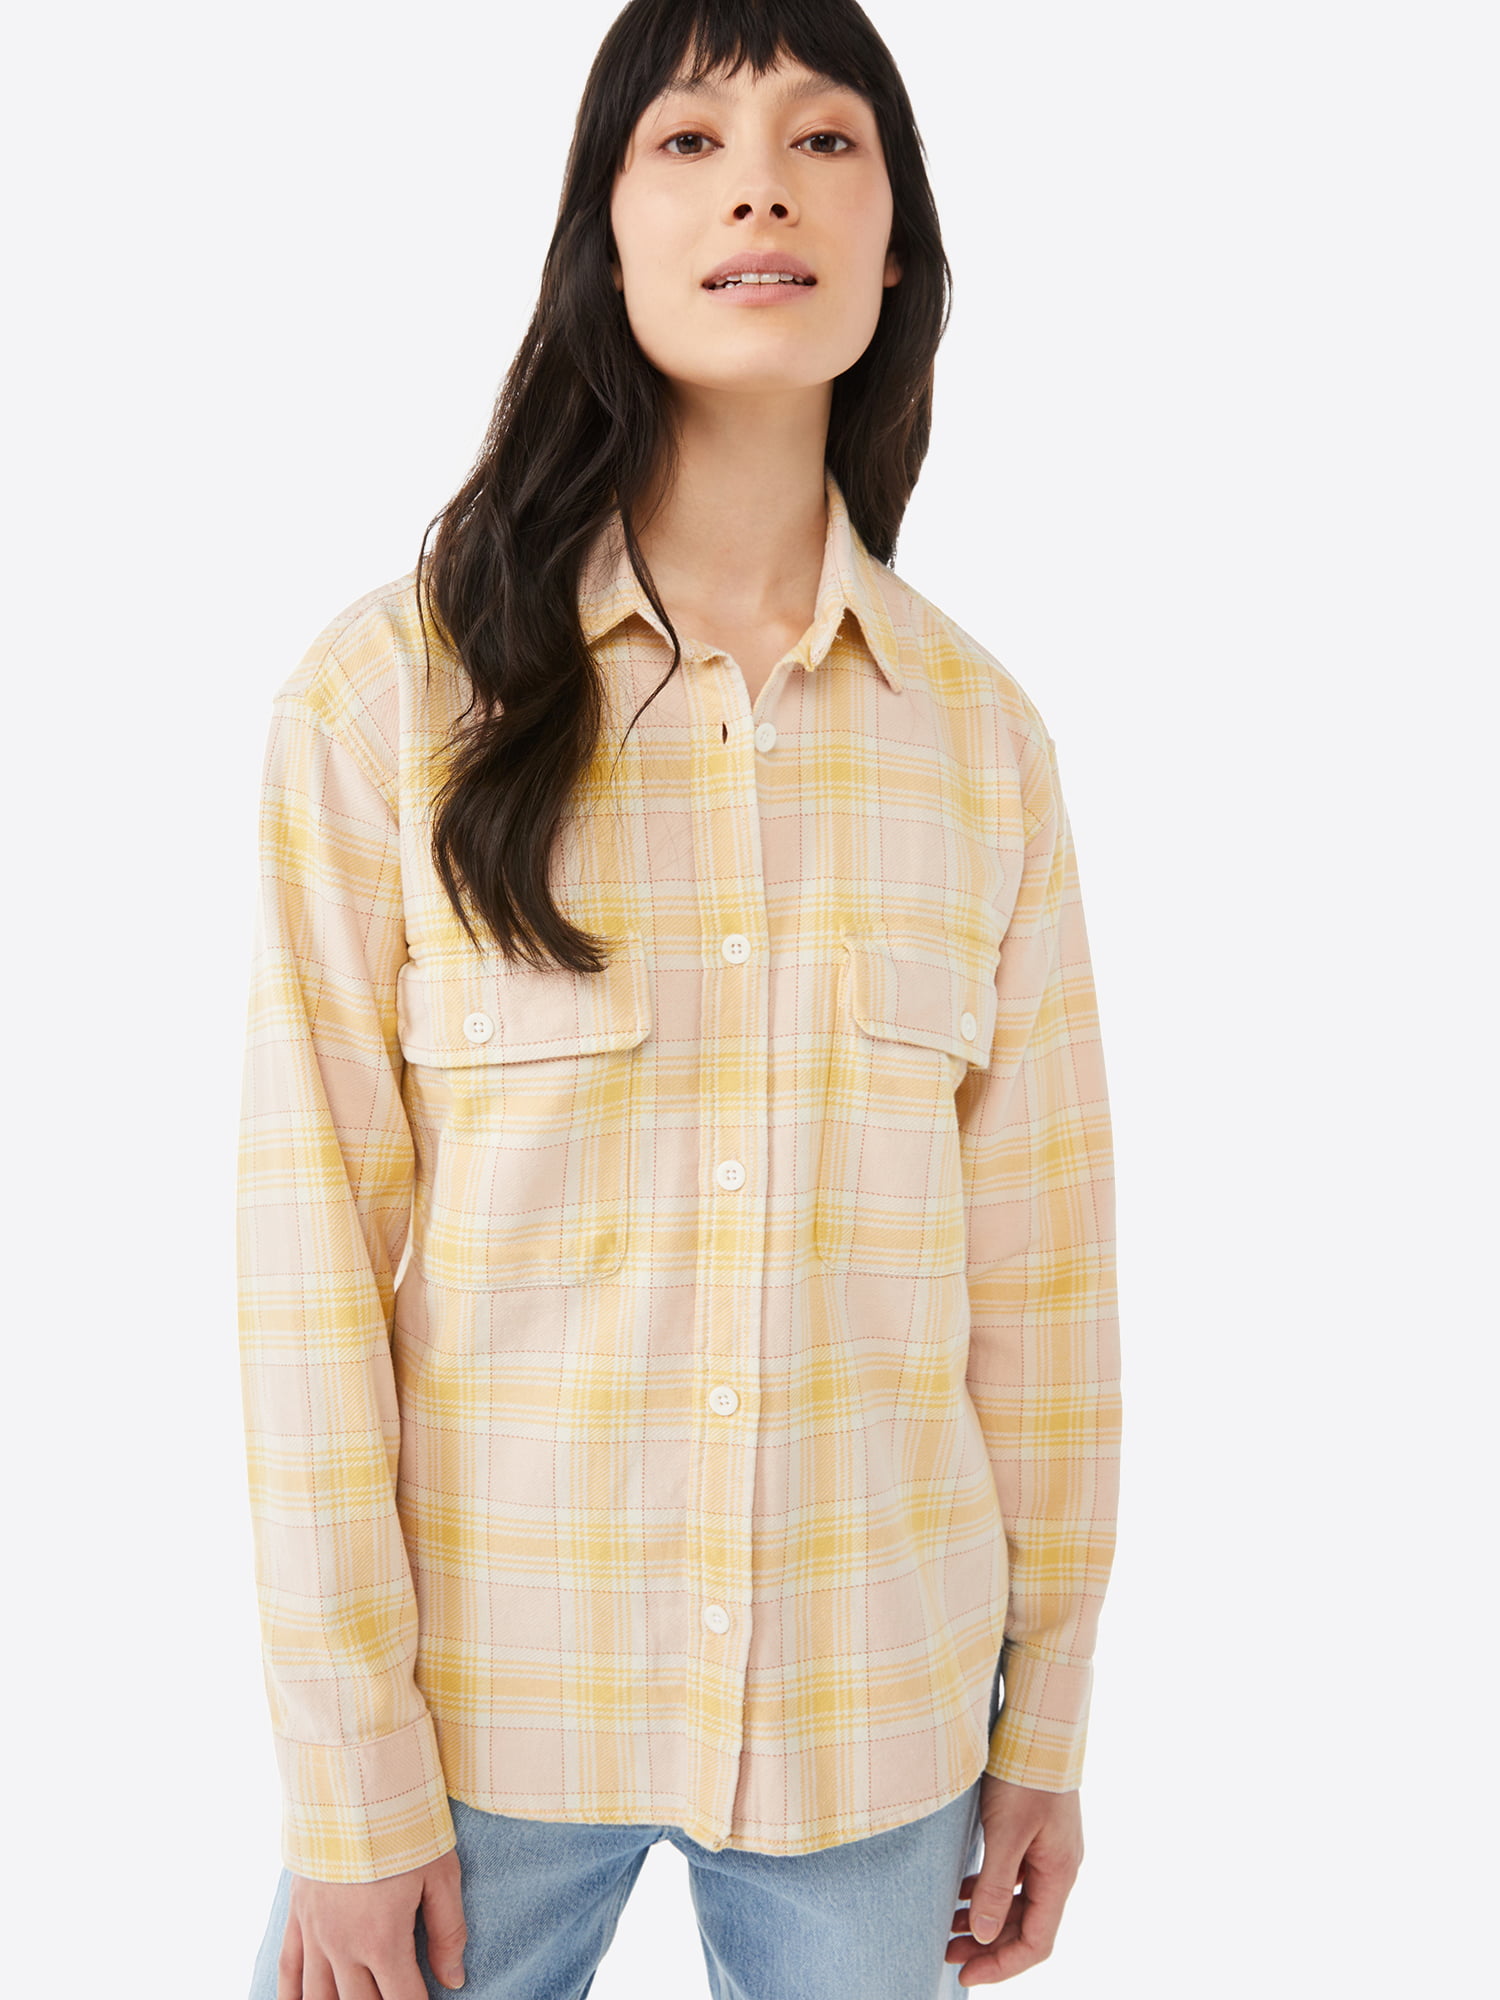 Creatable World Doll Yellow Plaid Long Sleeve Shirt Top Clothes Fashions 